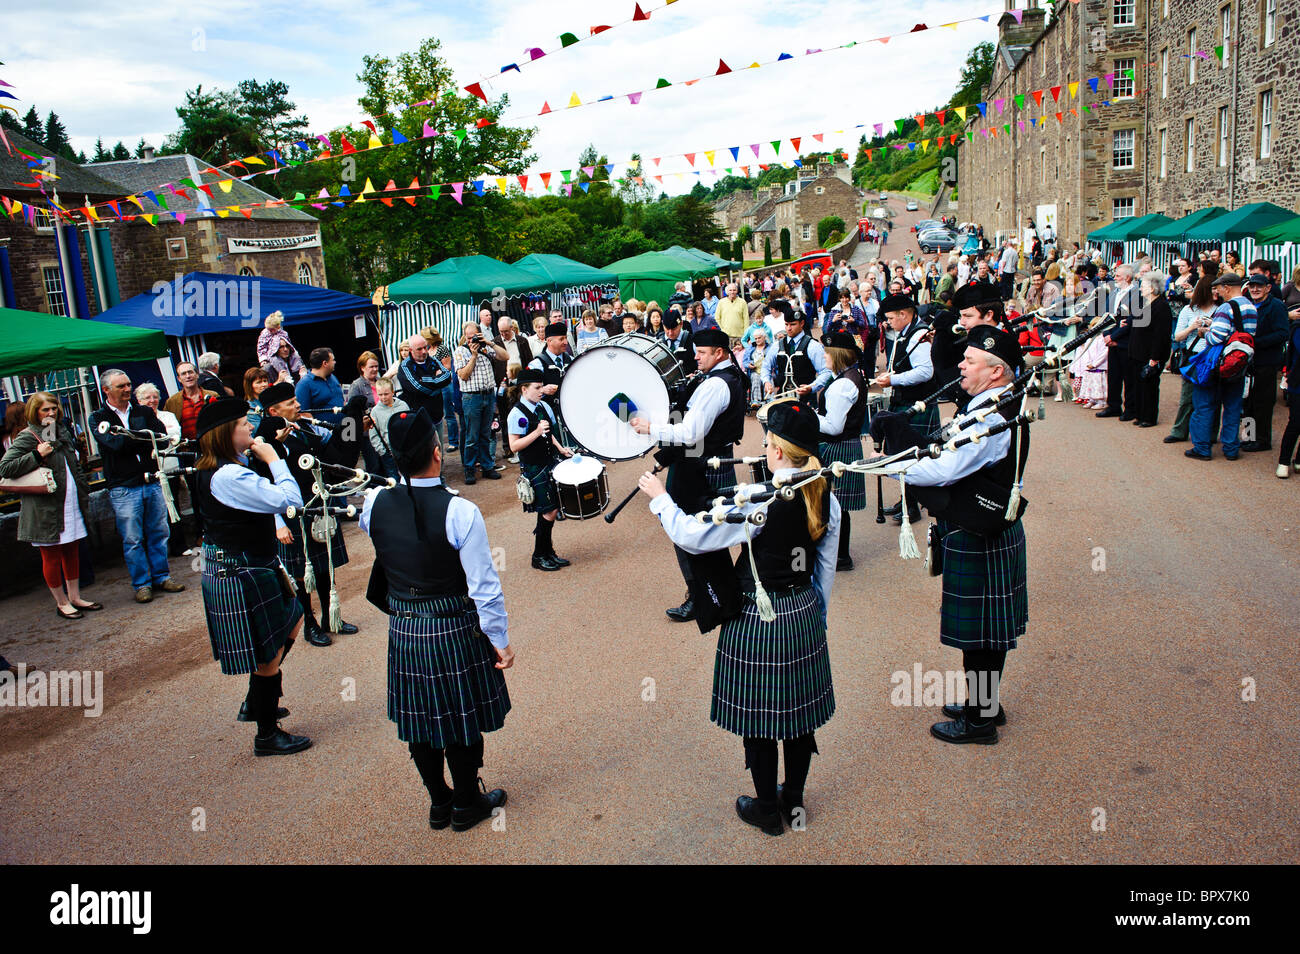 Lanark Pipe Band play at the Victorian Fair in new Lanark, Scotland Stock Photo